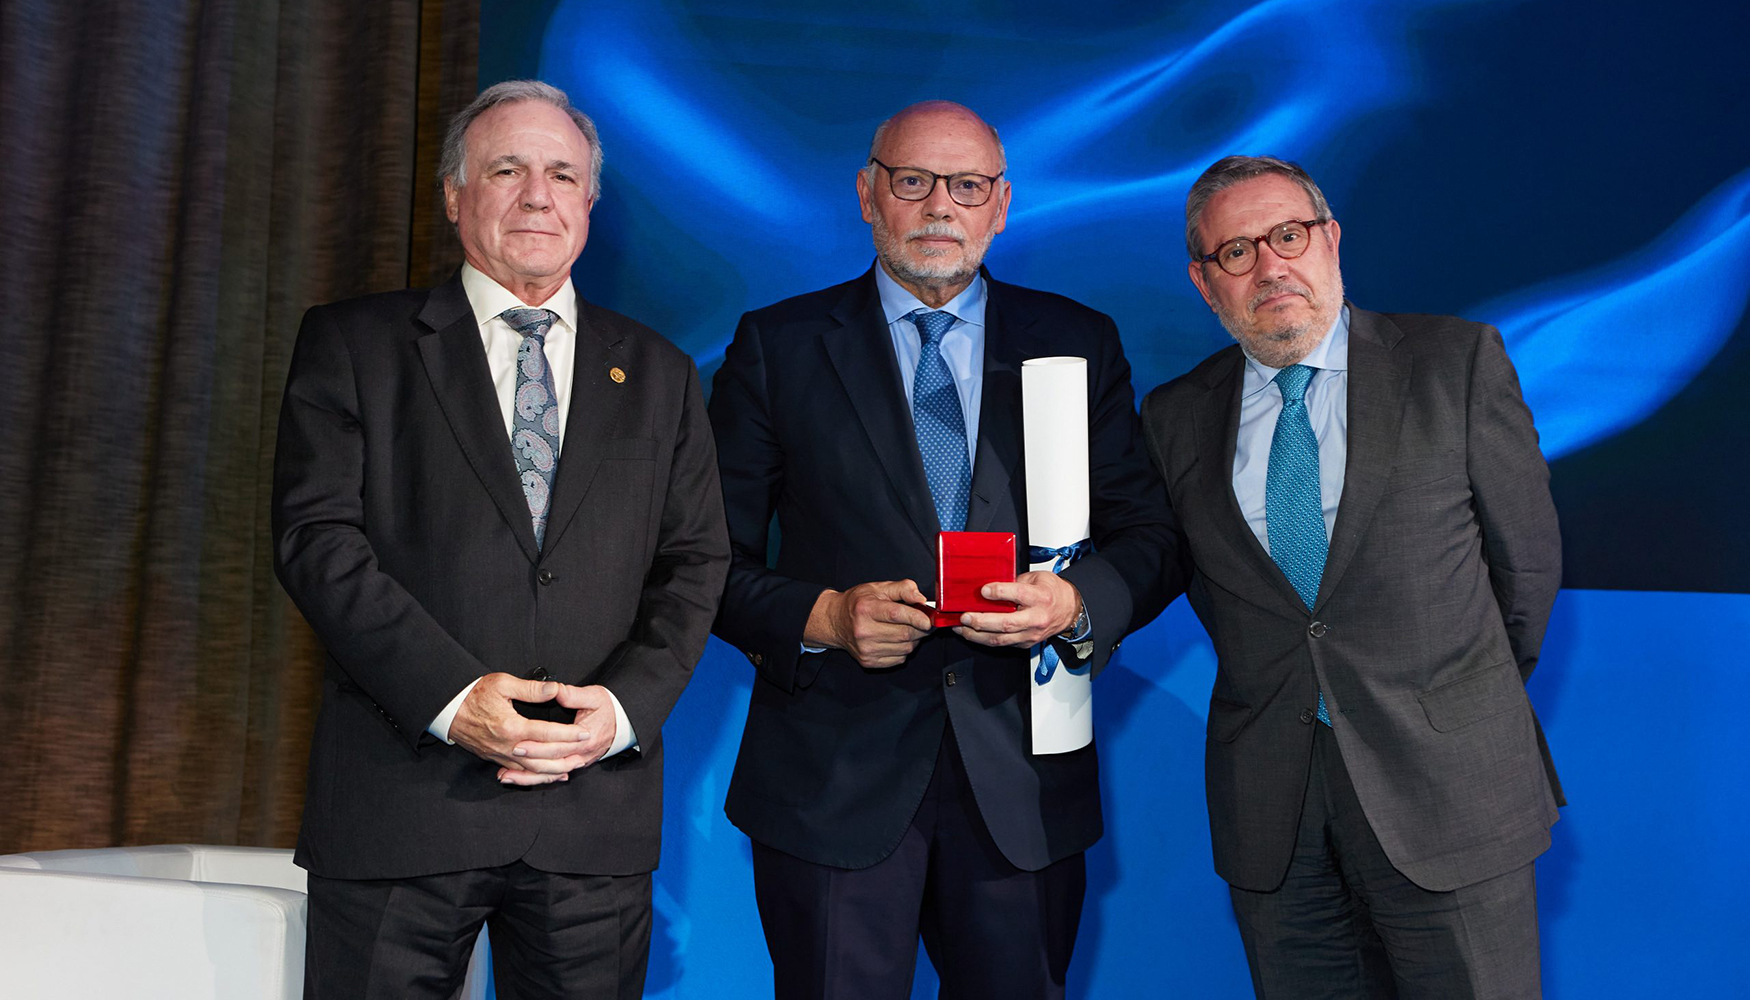 Medalla de Oro al Mrito Personal 2022 a Francisco Javier Herrero Lizano, director general de Carreteras del Ministerio de Transportes...